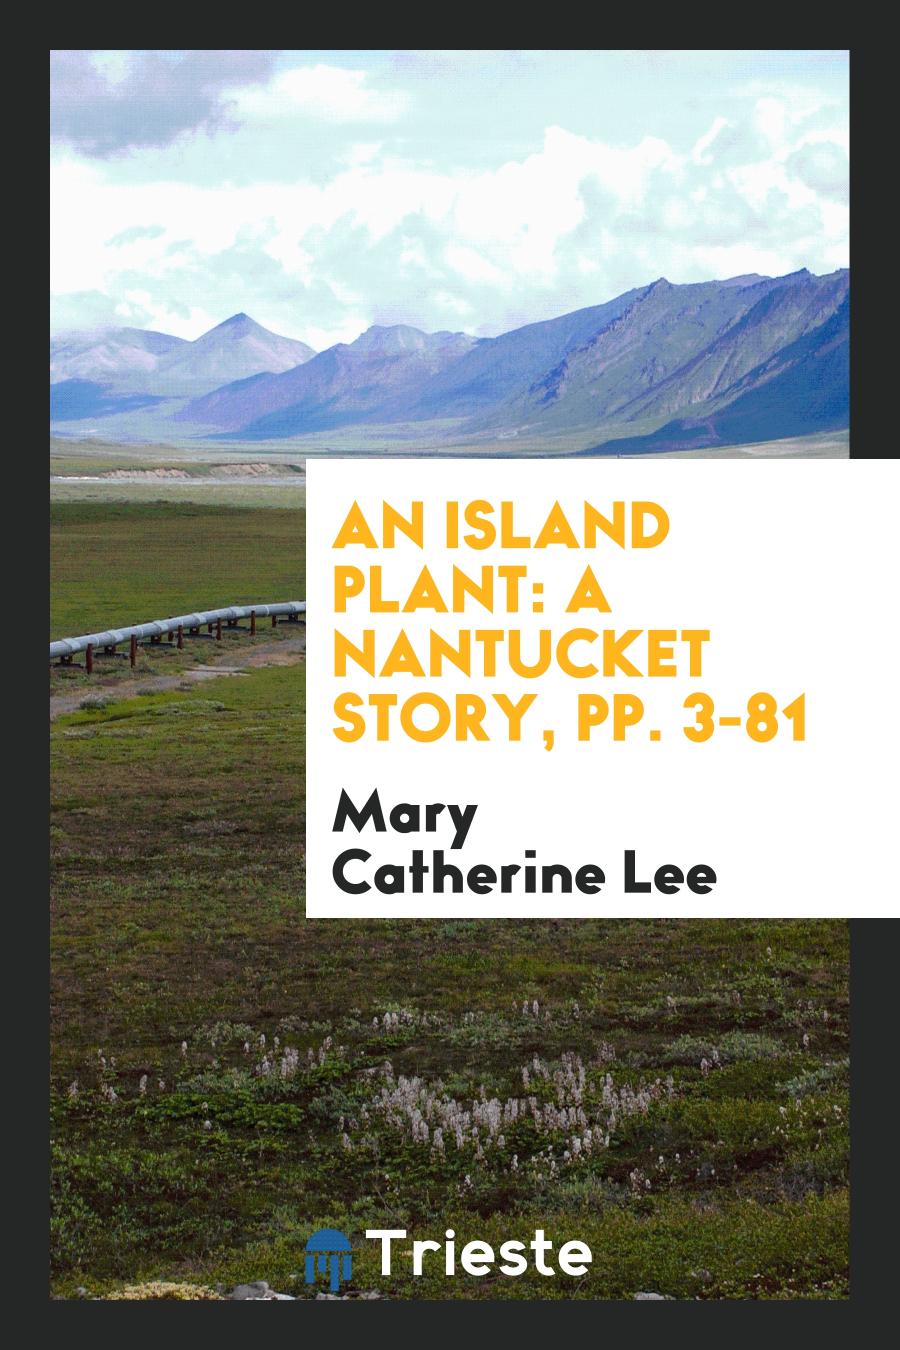 An Island Plant: A Nantucket Story, pp. 3-81